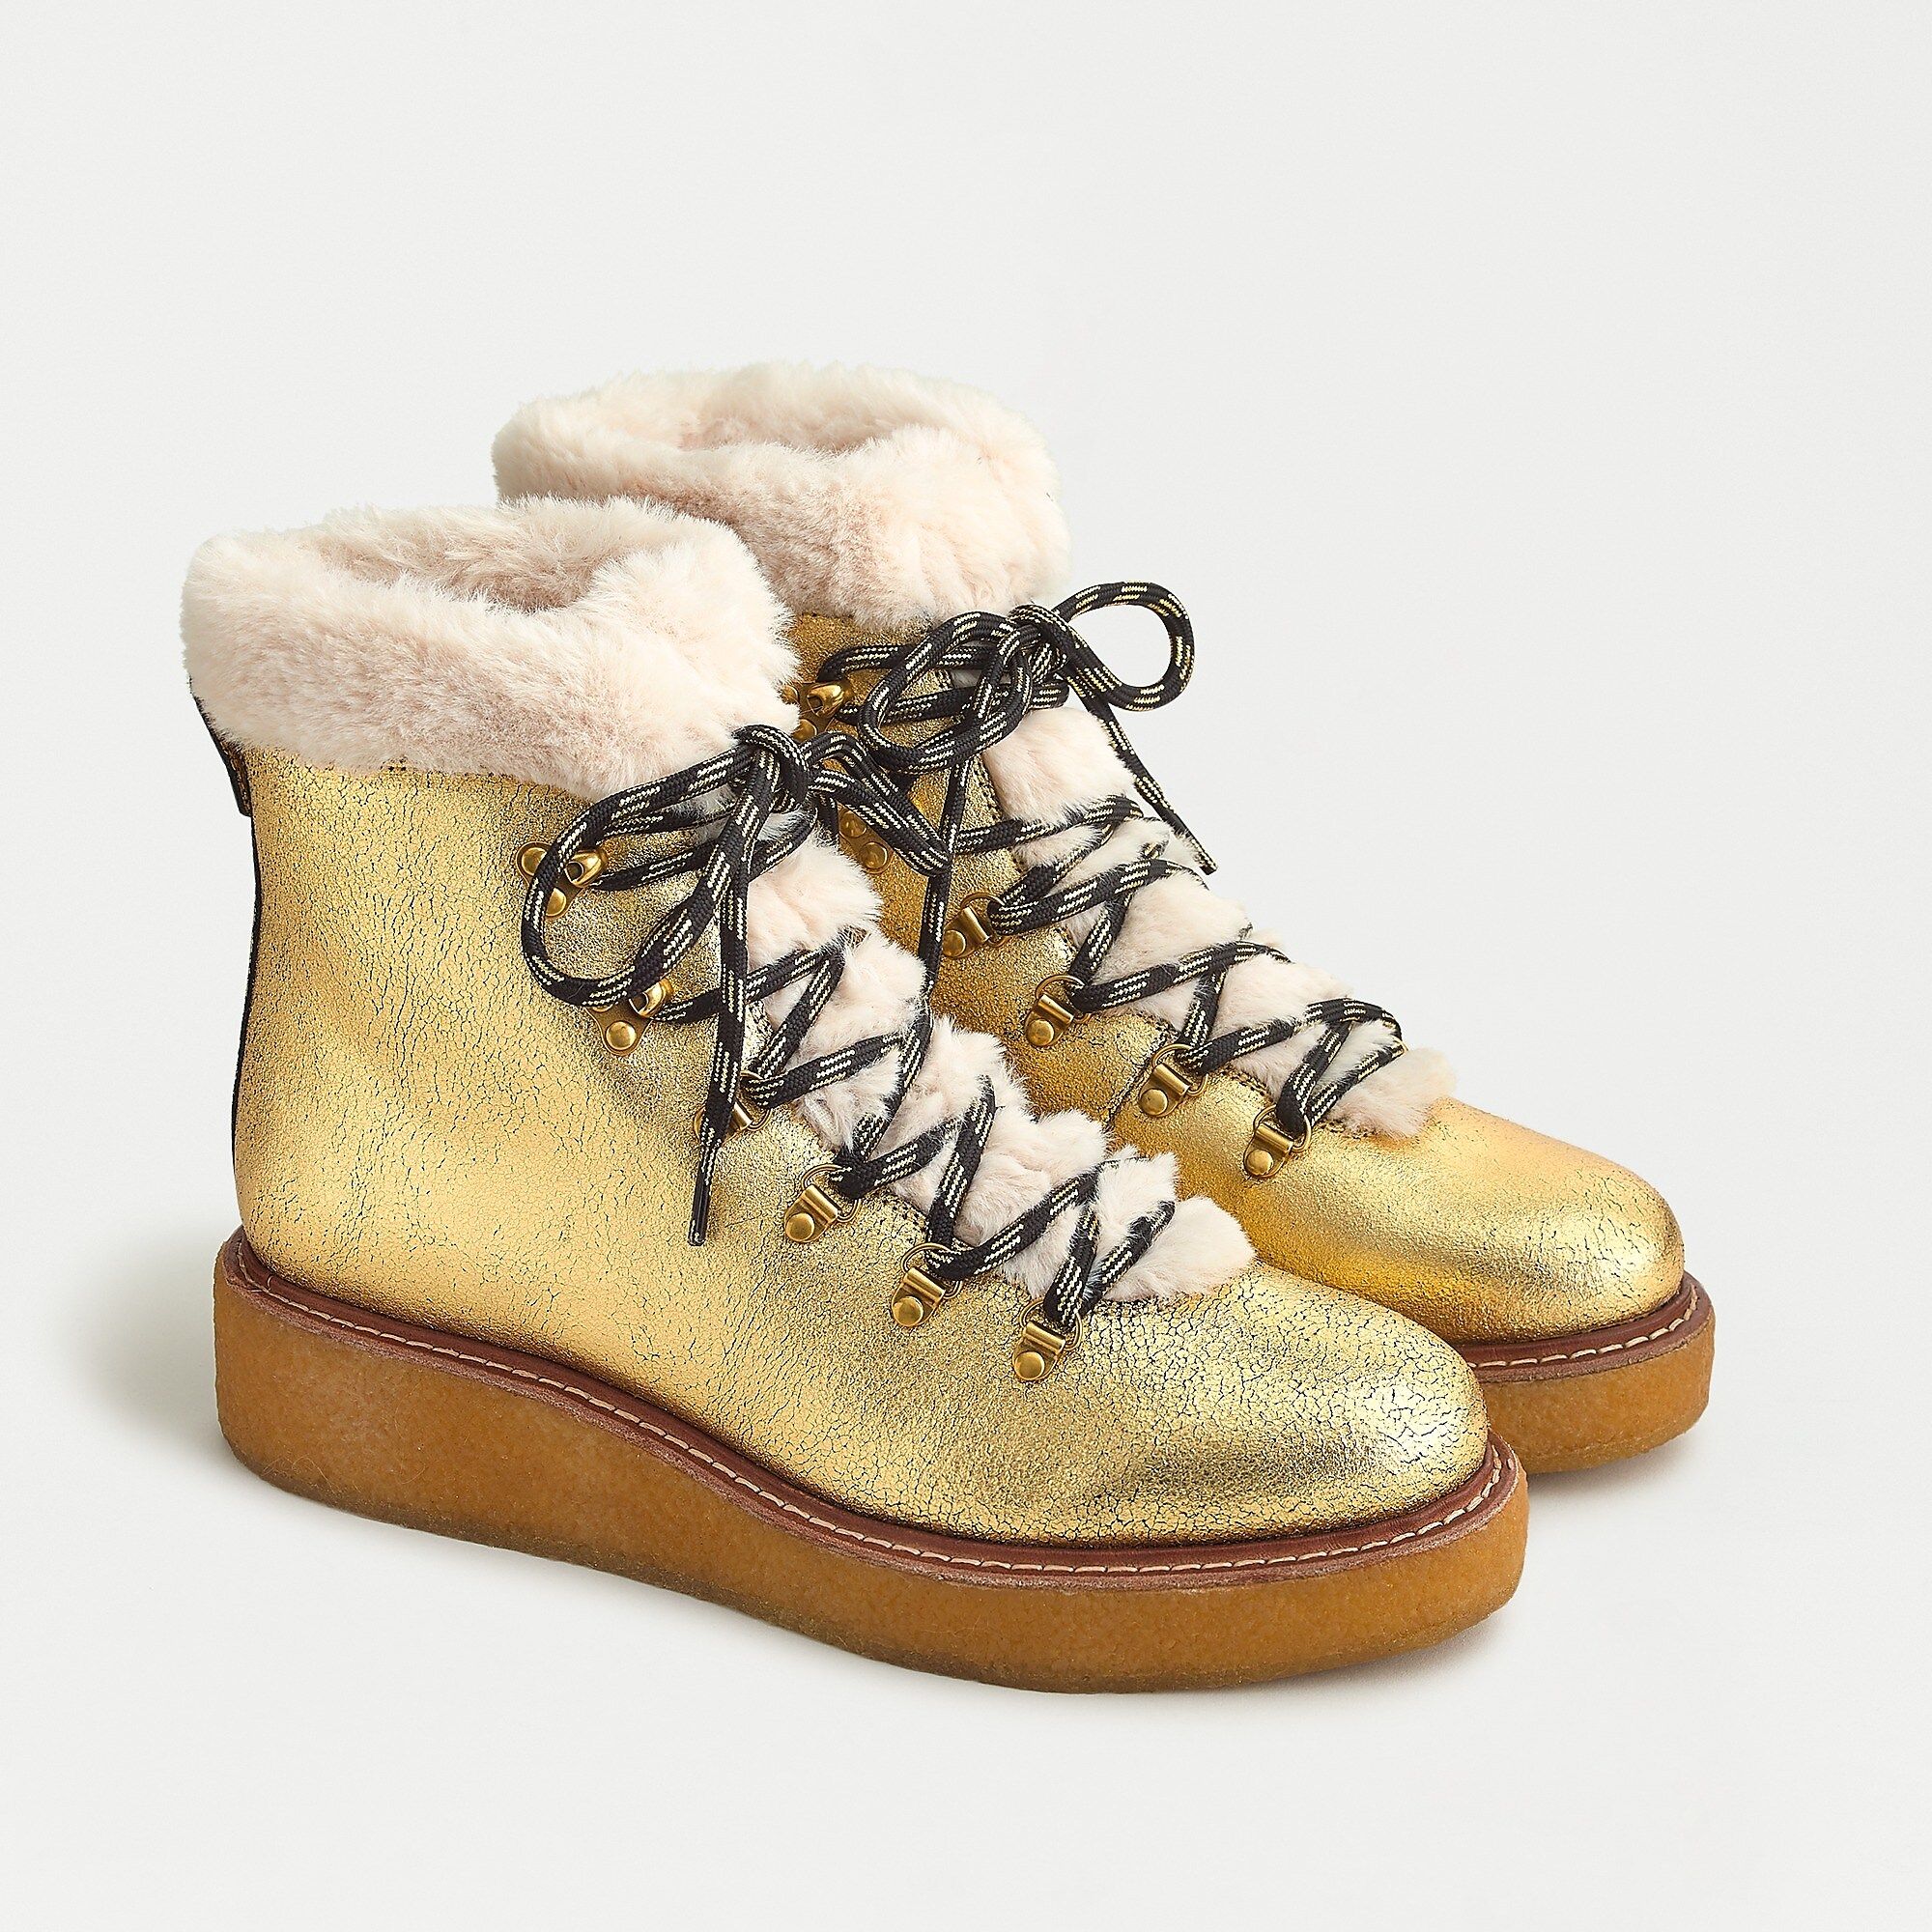 Metallic winter boots with wedge crepe sole | J.Crew US